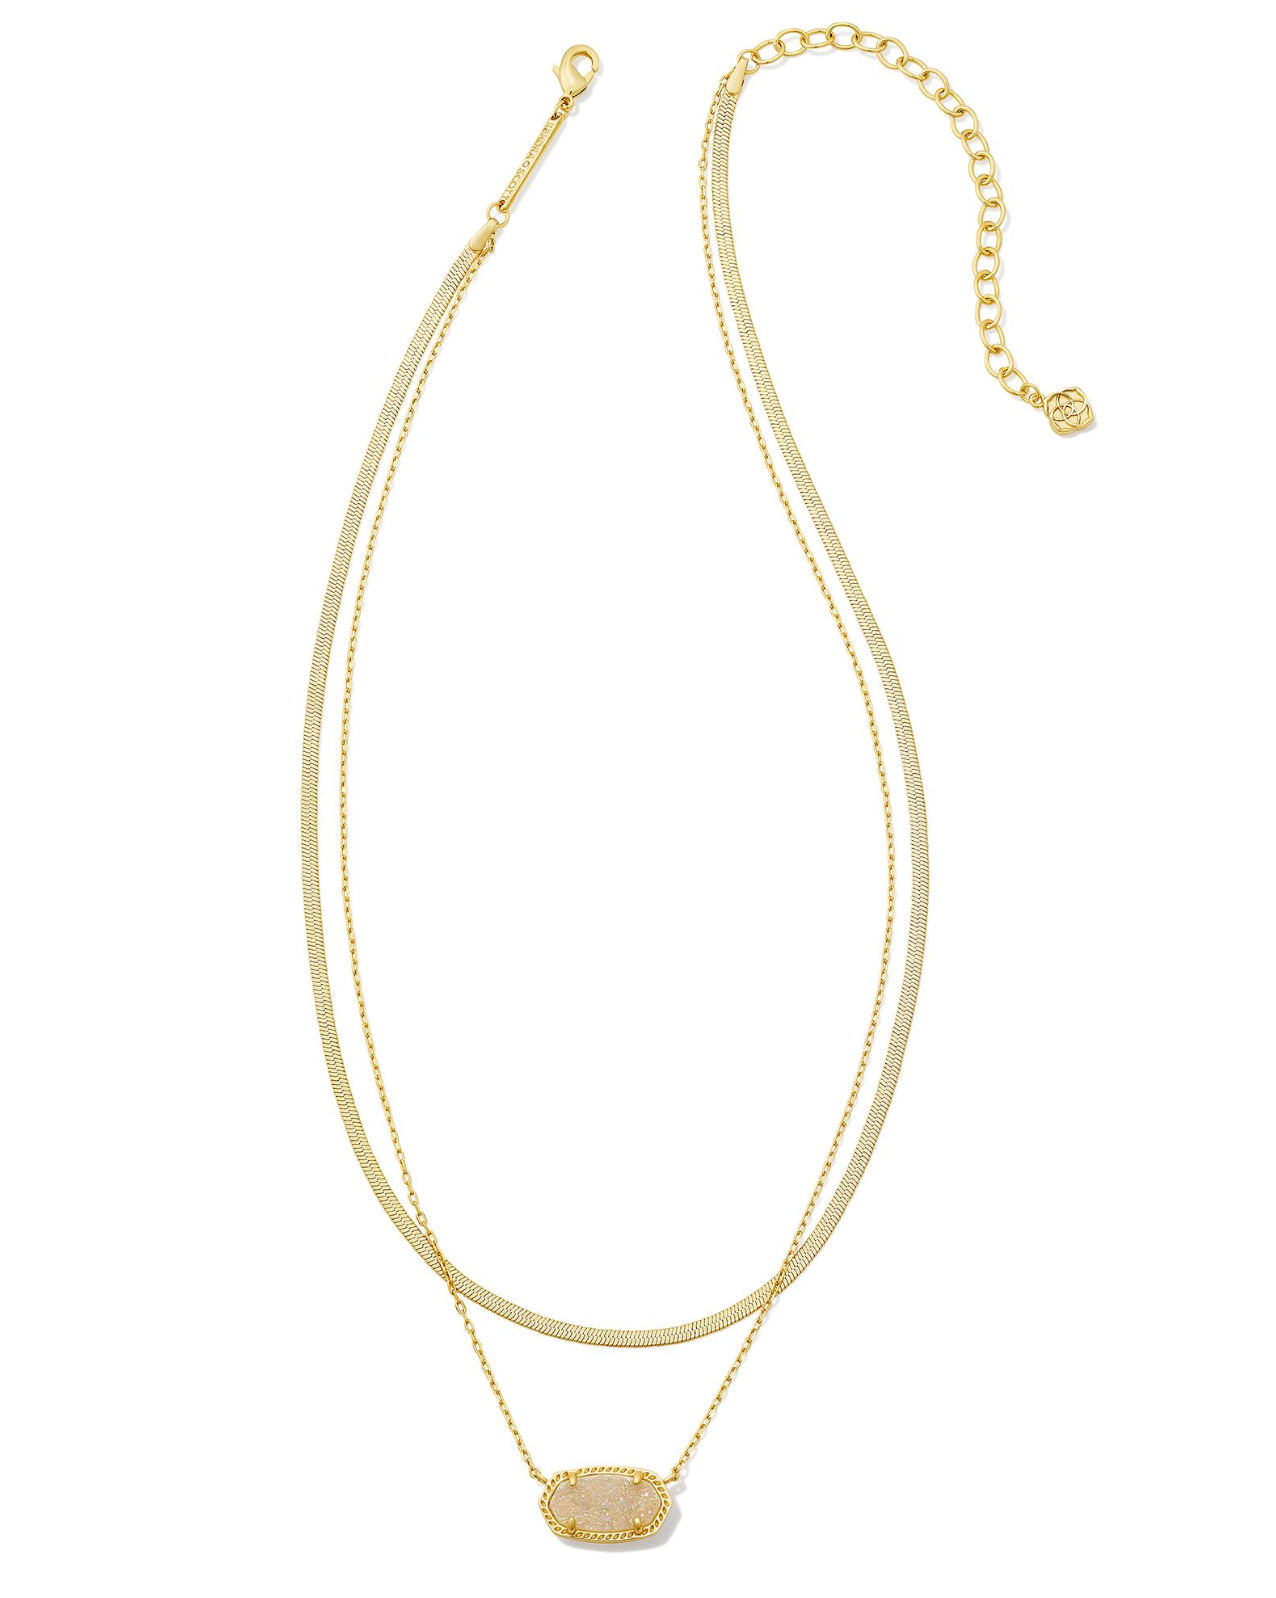 Elisa Herringbone Gold Multi Strand Necklace in Iridescent Drusy | KENDRA SCOTT - The Street Boutique 